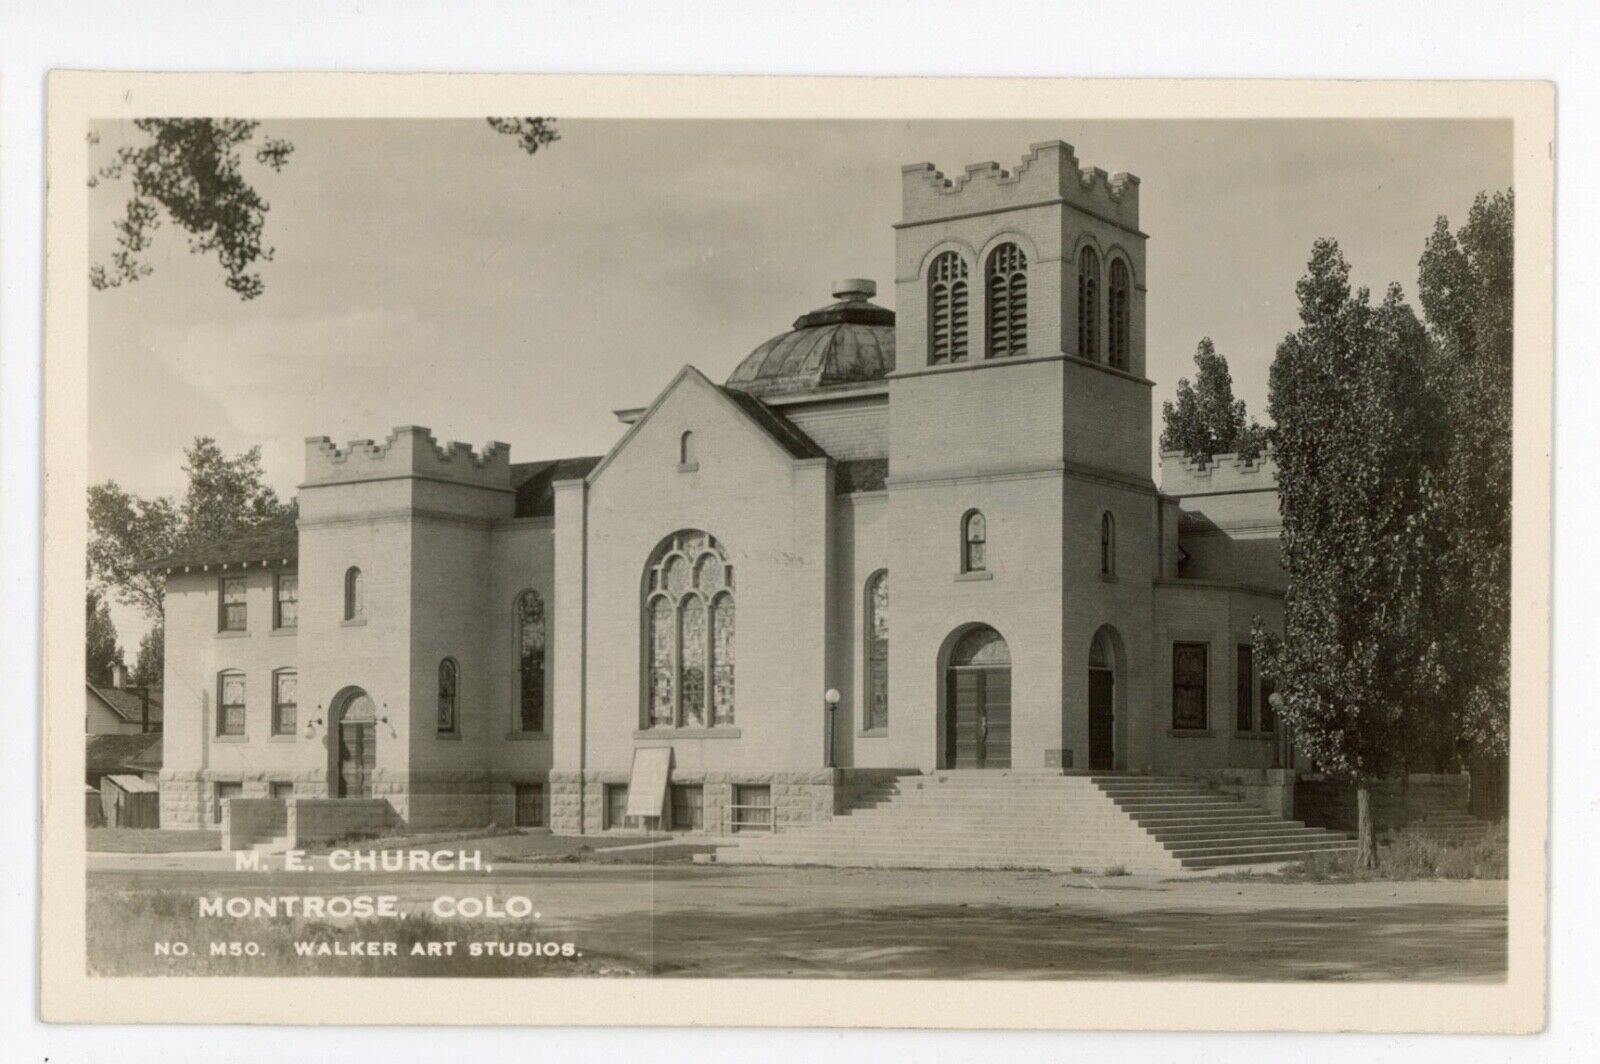 CO, Montrose. M. E. Church. Real Photo Postcard